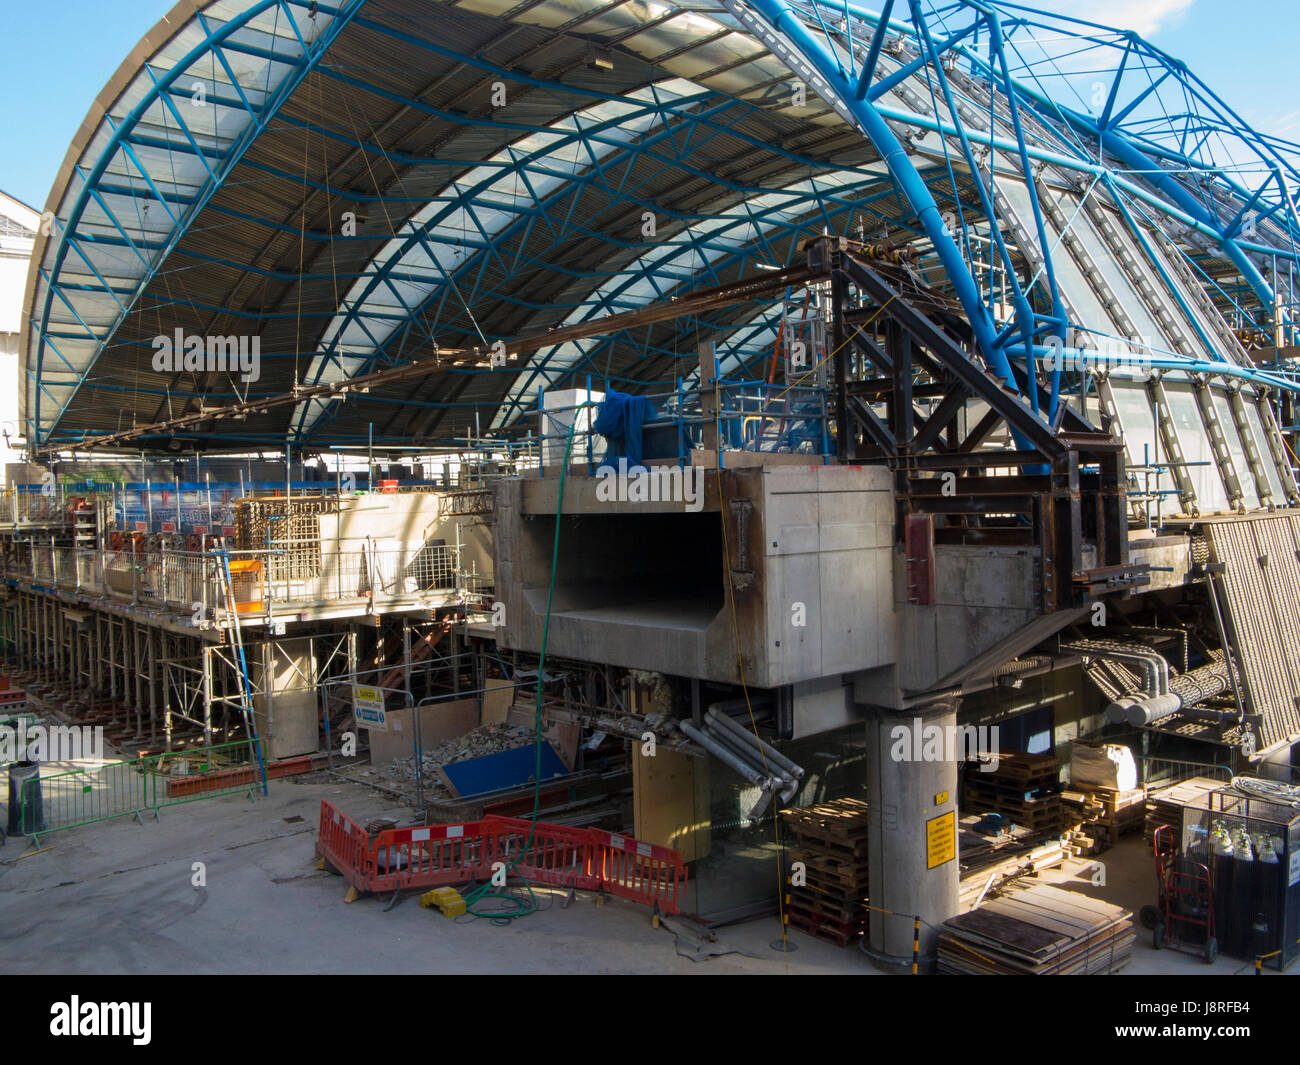 The international train terminus at Waterloo under construction Stock Photo